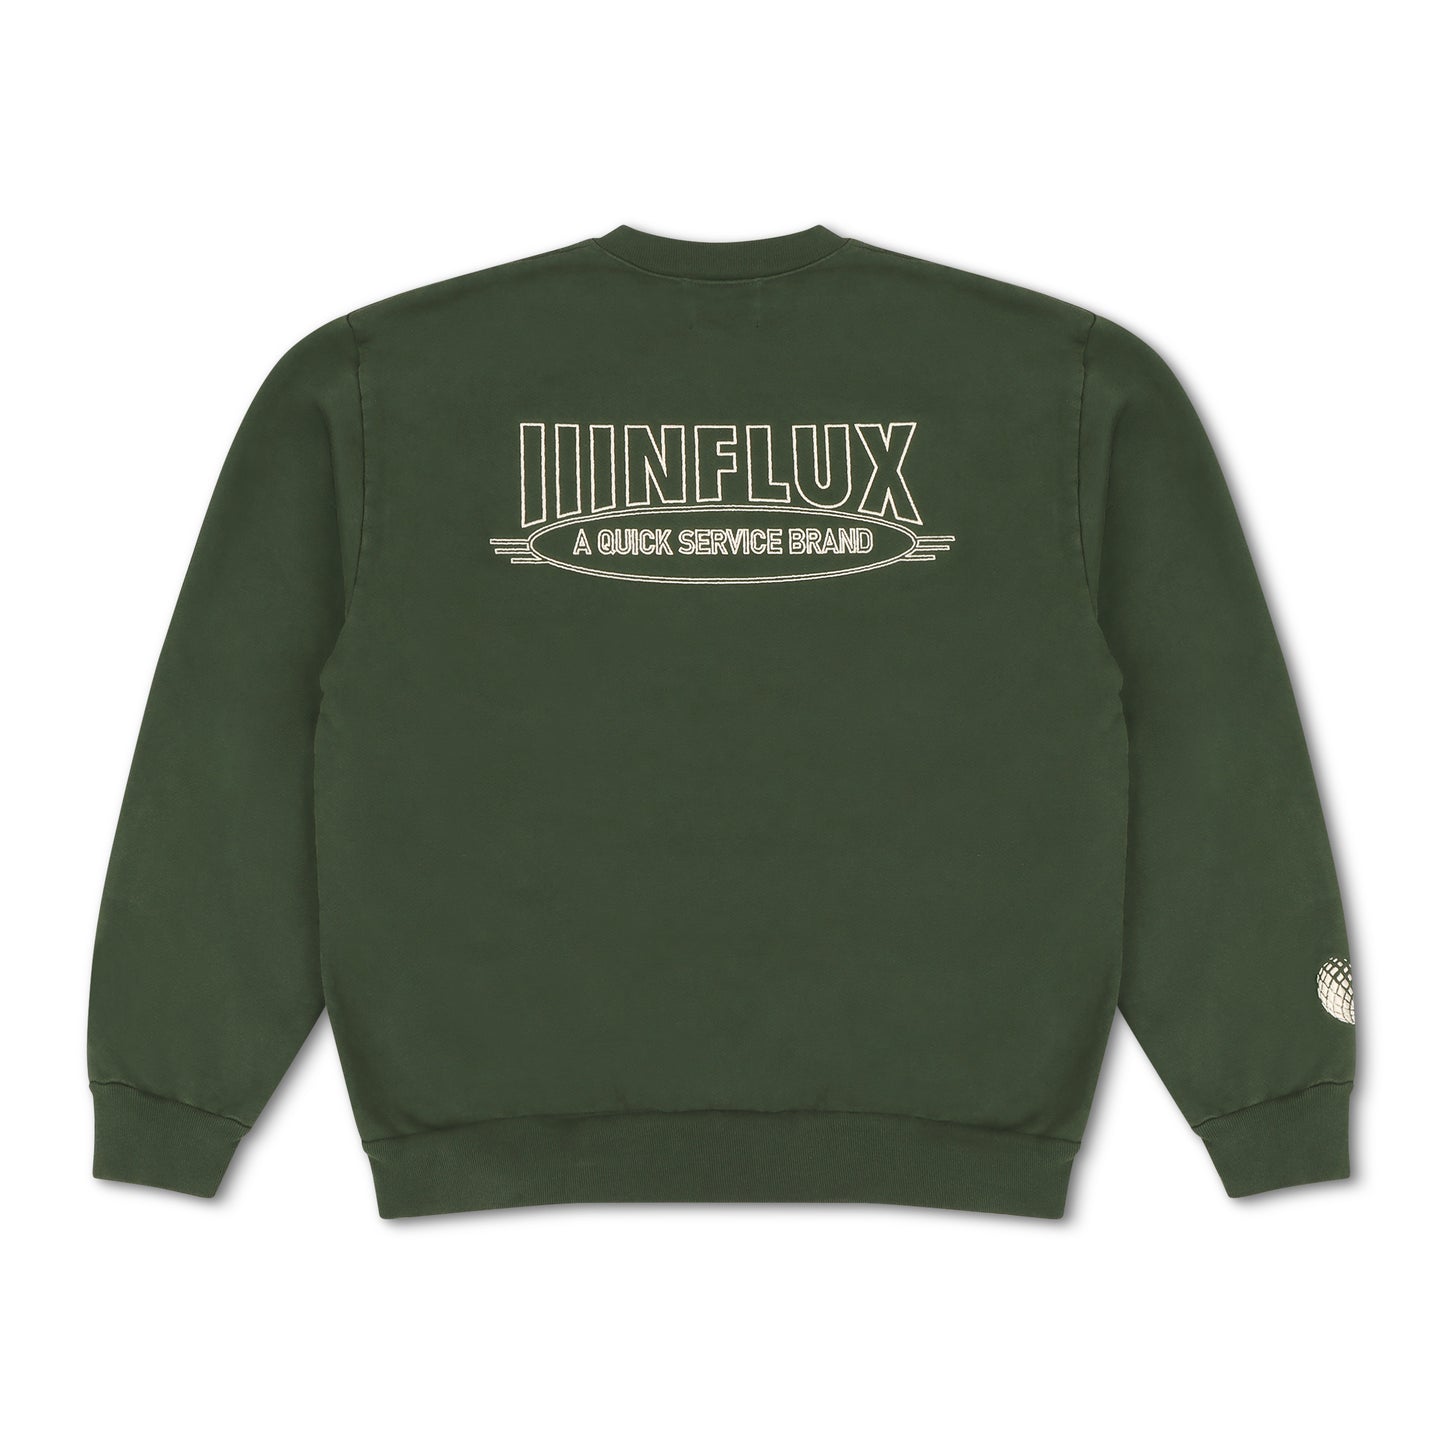 Quick Service Brand Crewneck (Military Green)